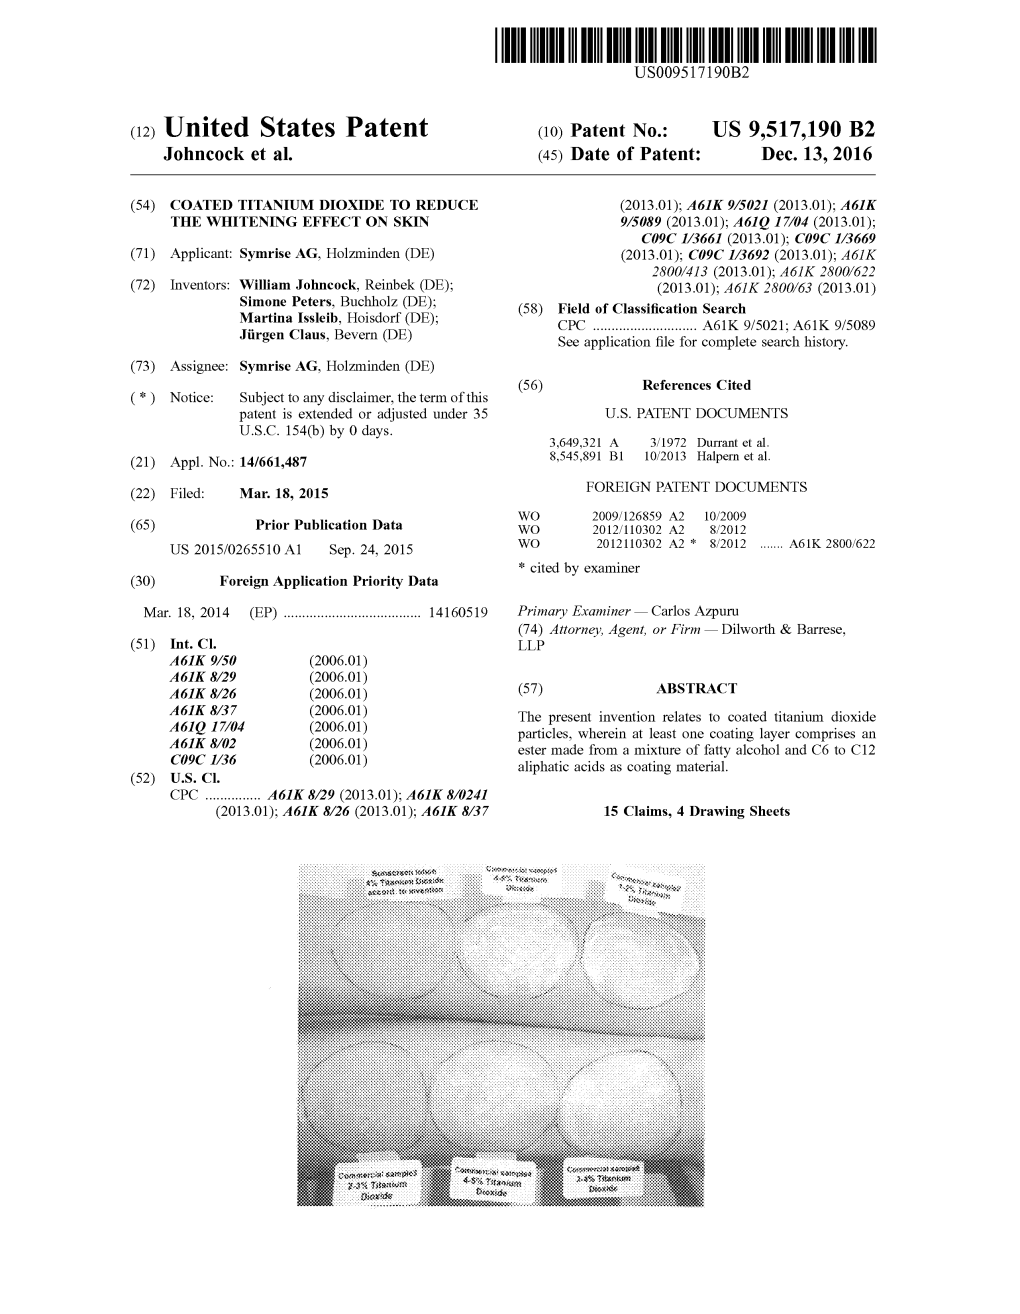 (10) Patent No.: US 9517190 B2